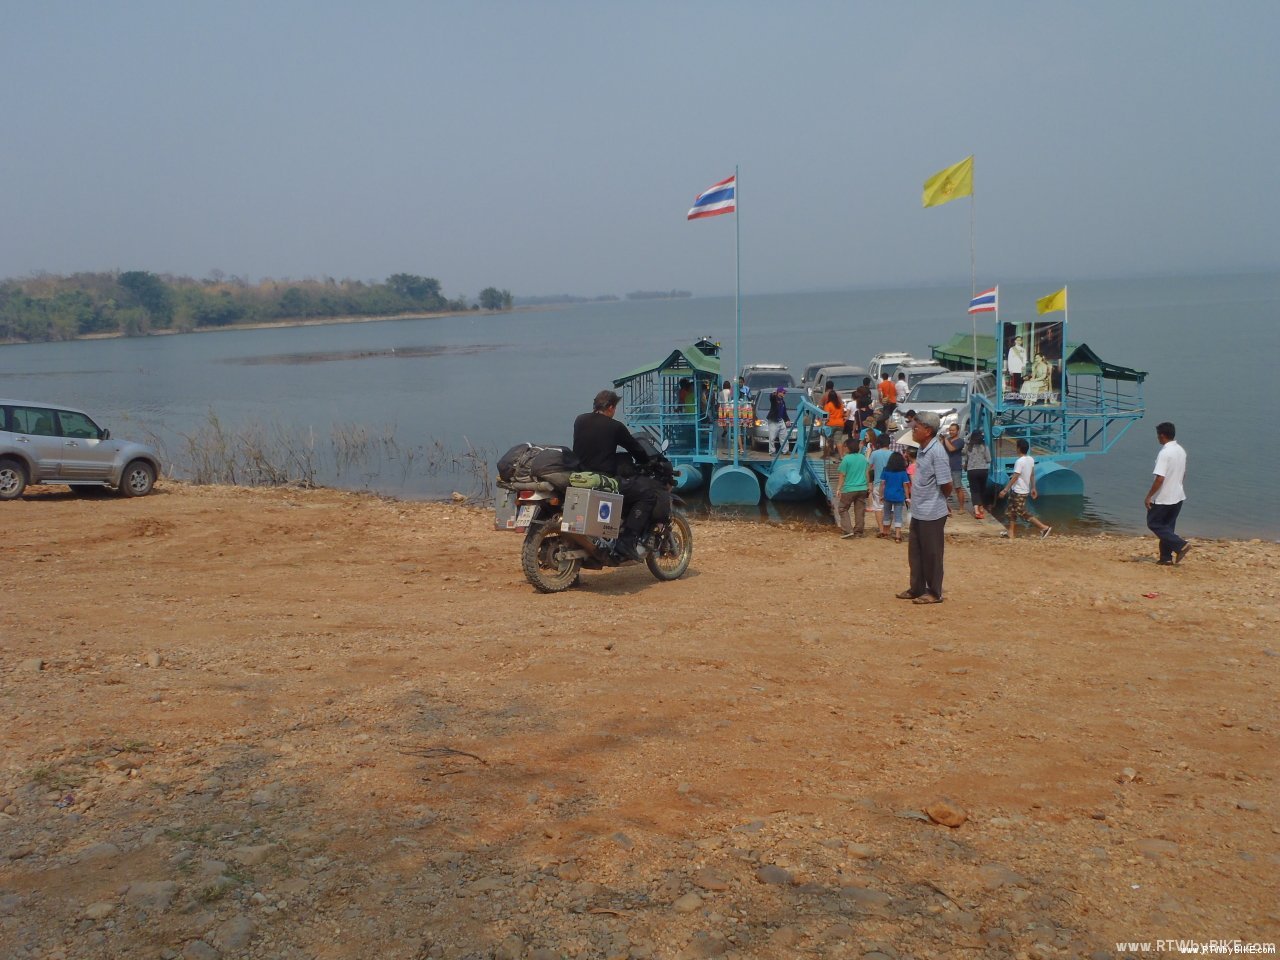 Kanchanaburi and Sukhothai